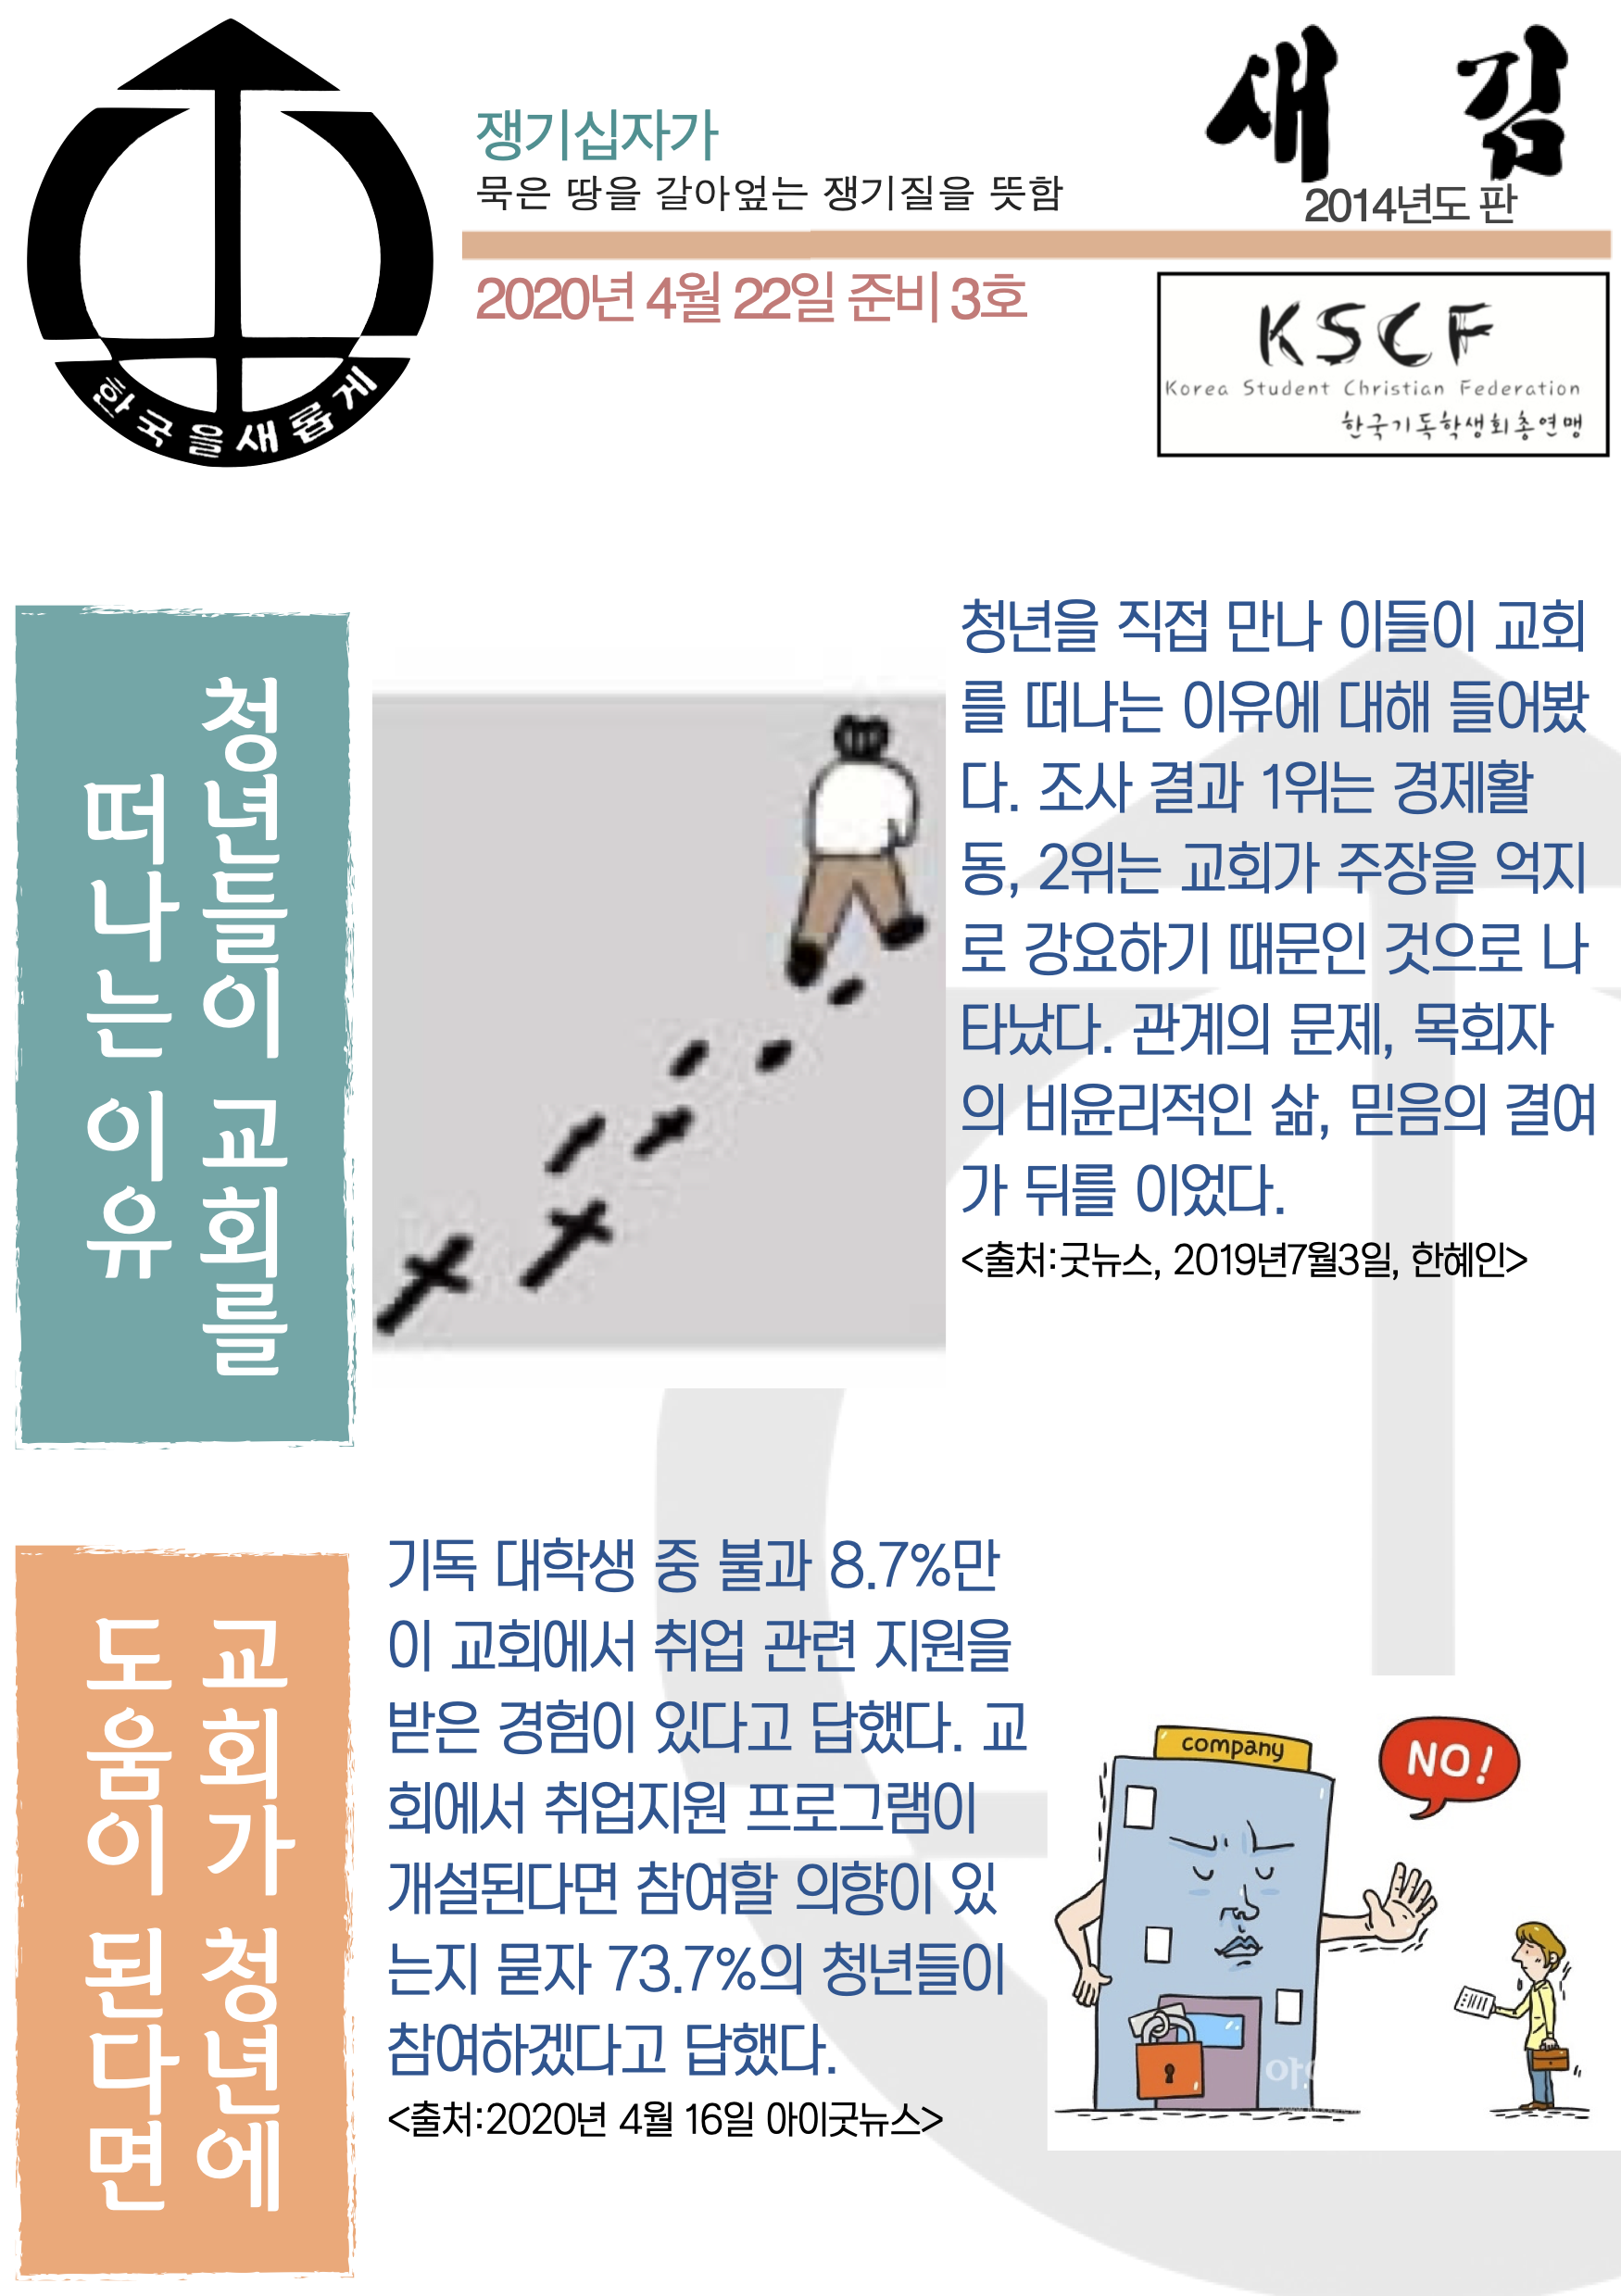 2020.04.22. KSCF 기독학생회소식지_새김_준비3호.png